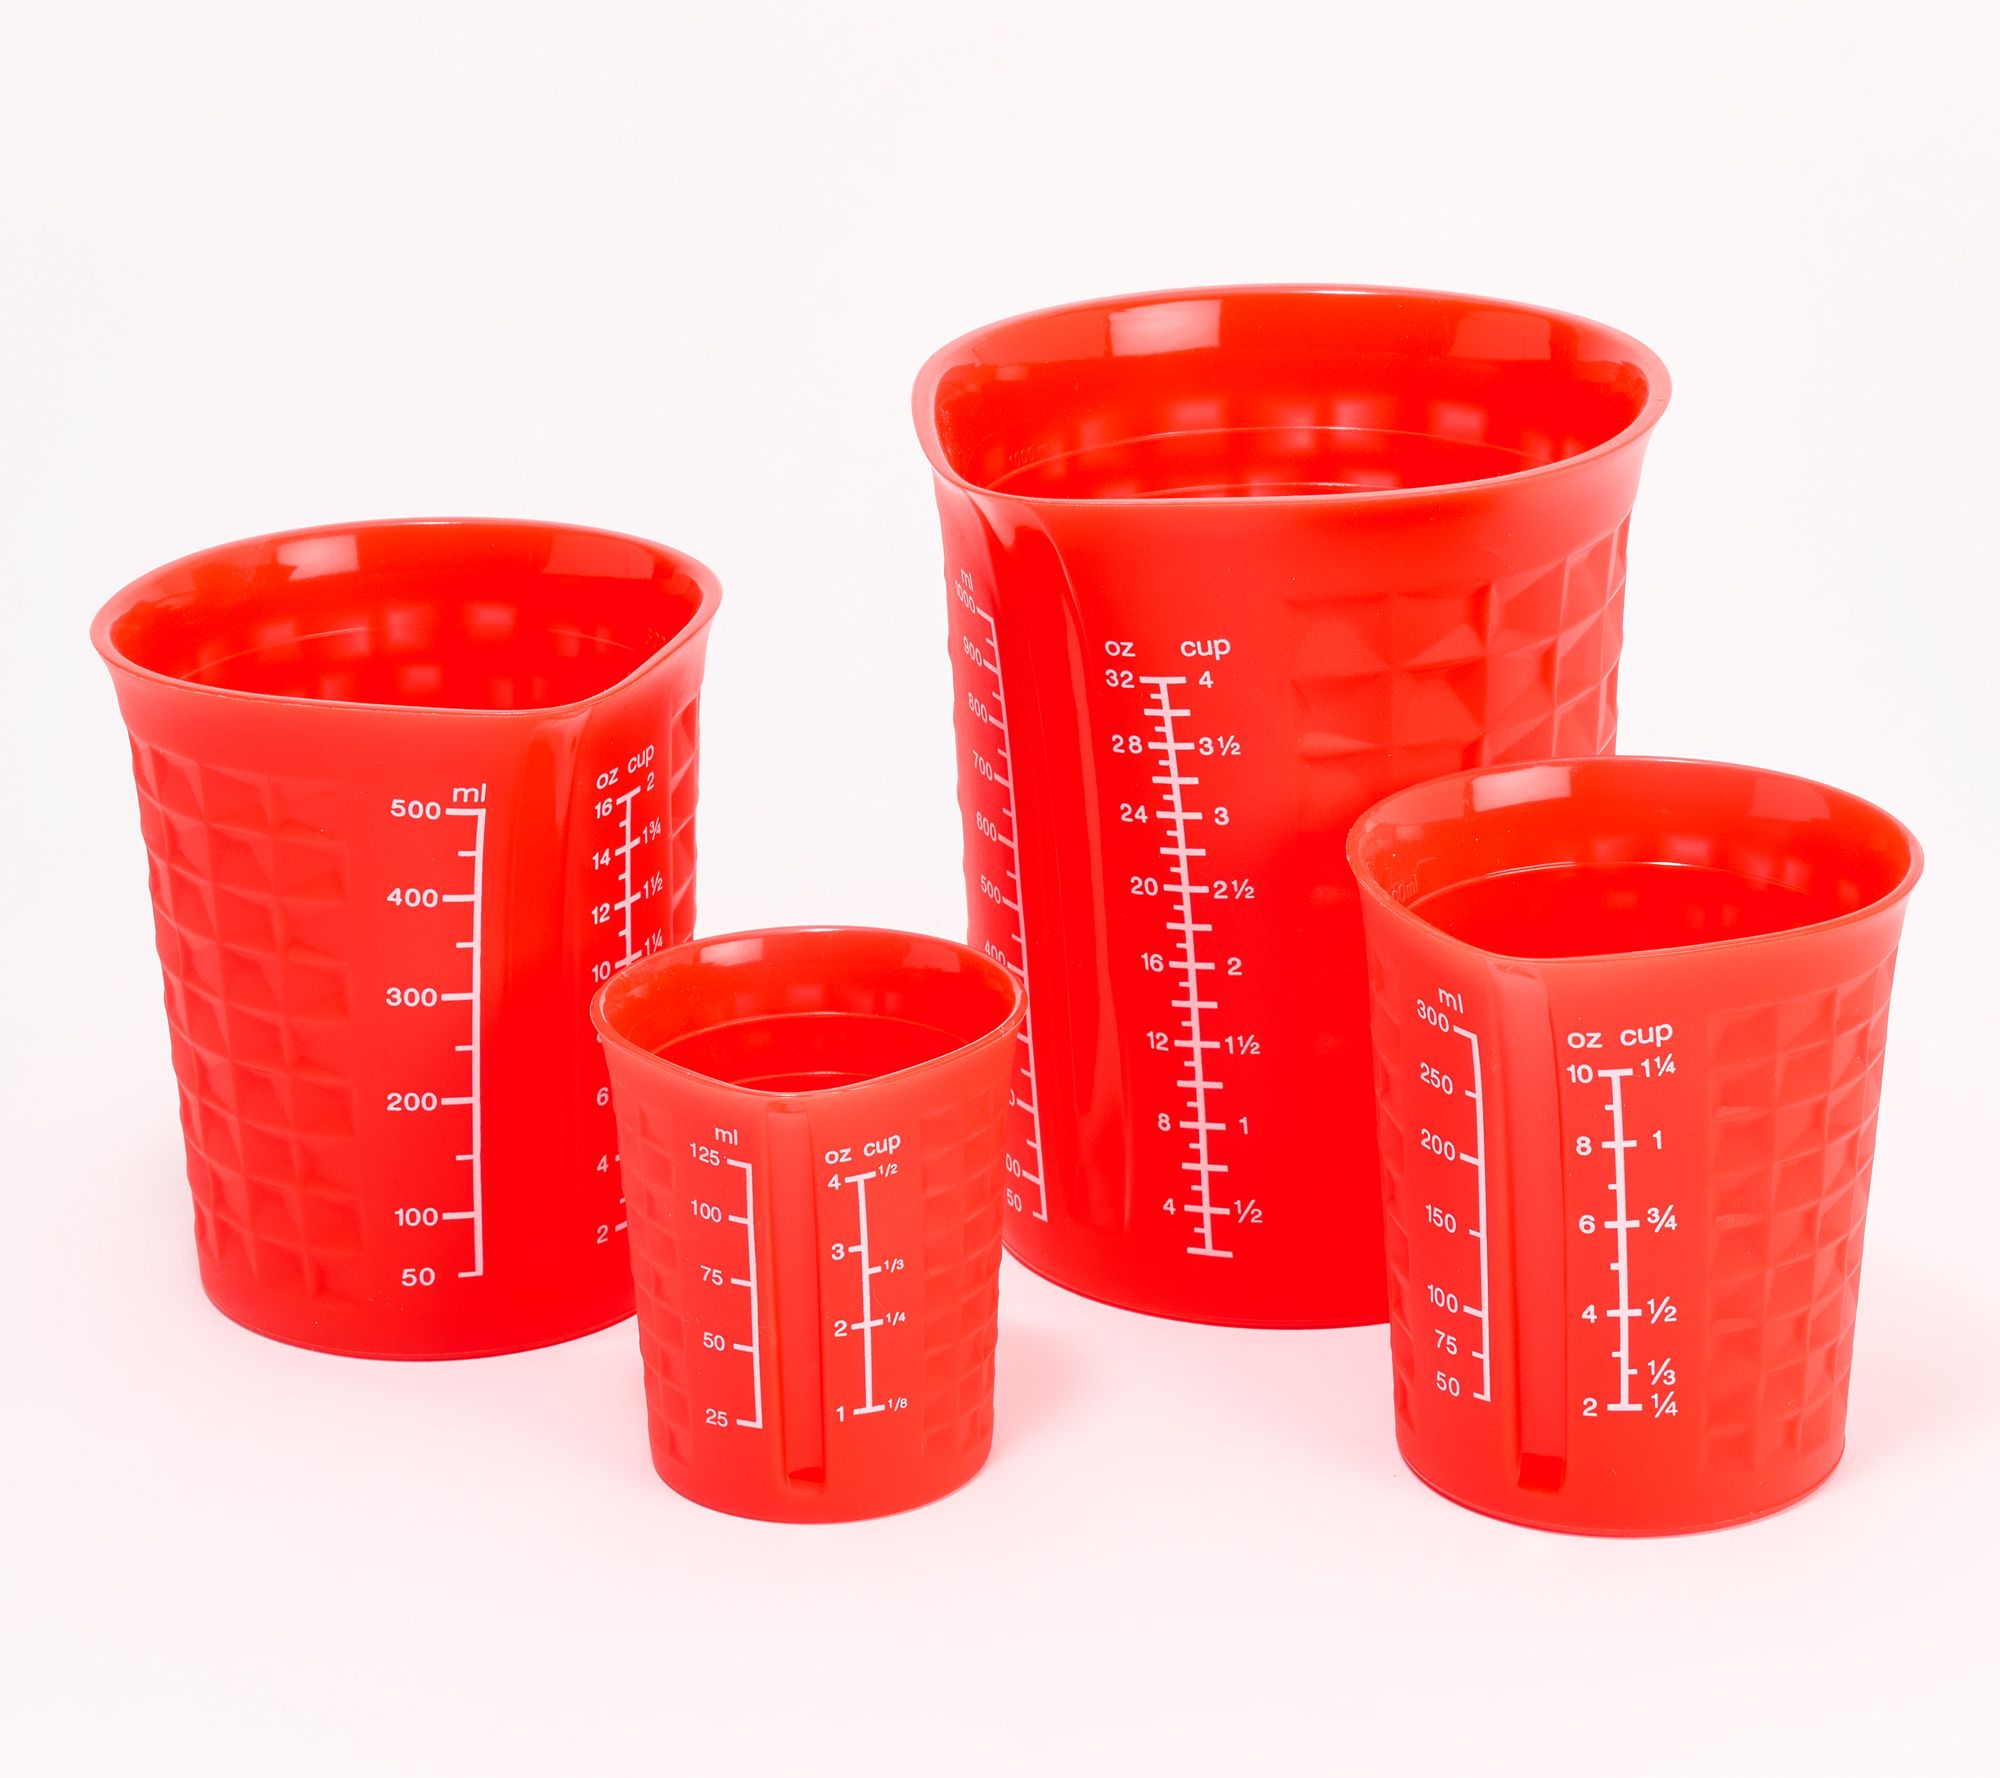 KOCHBLUME 4-Piece Nestable Silicone Measuring Cups 